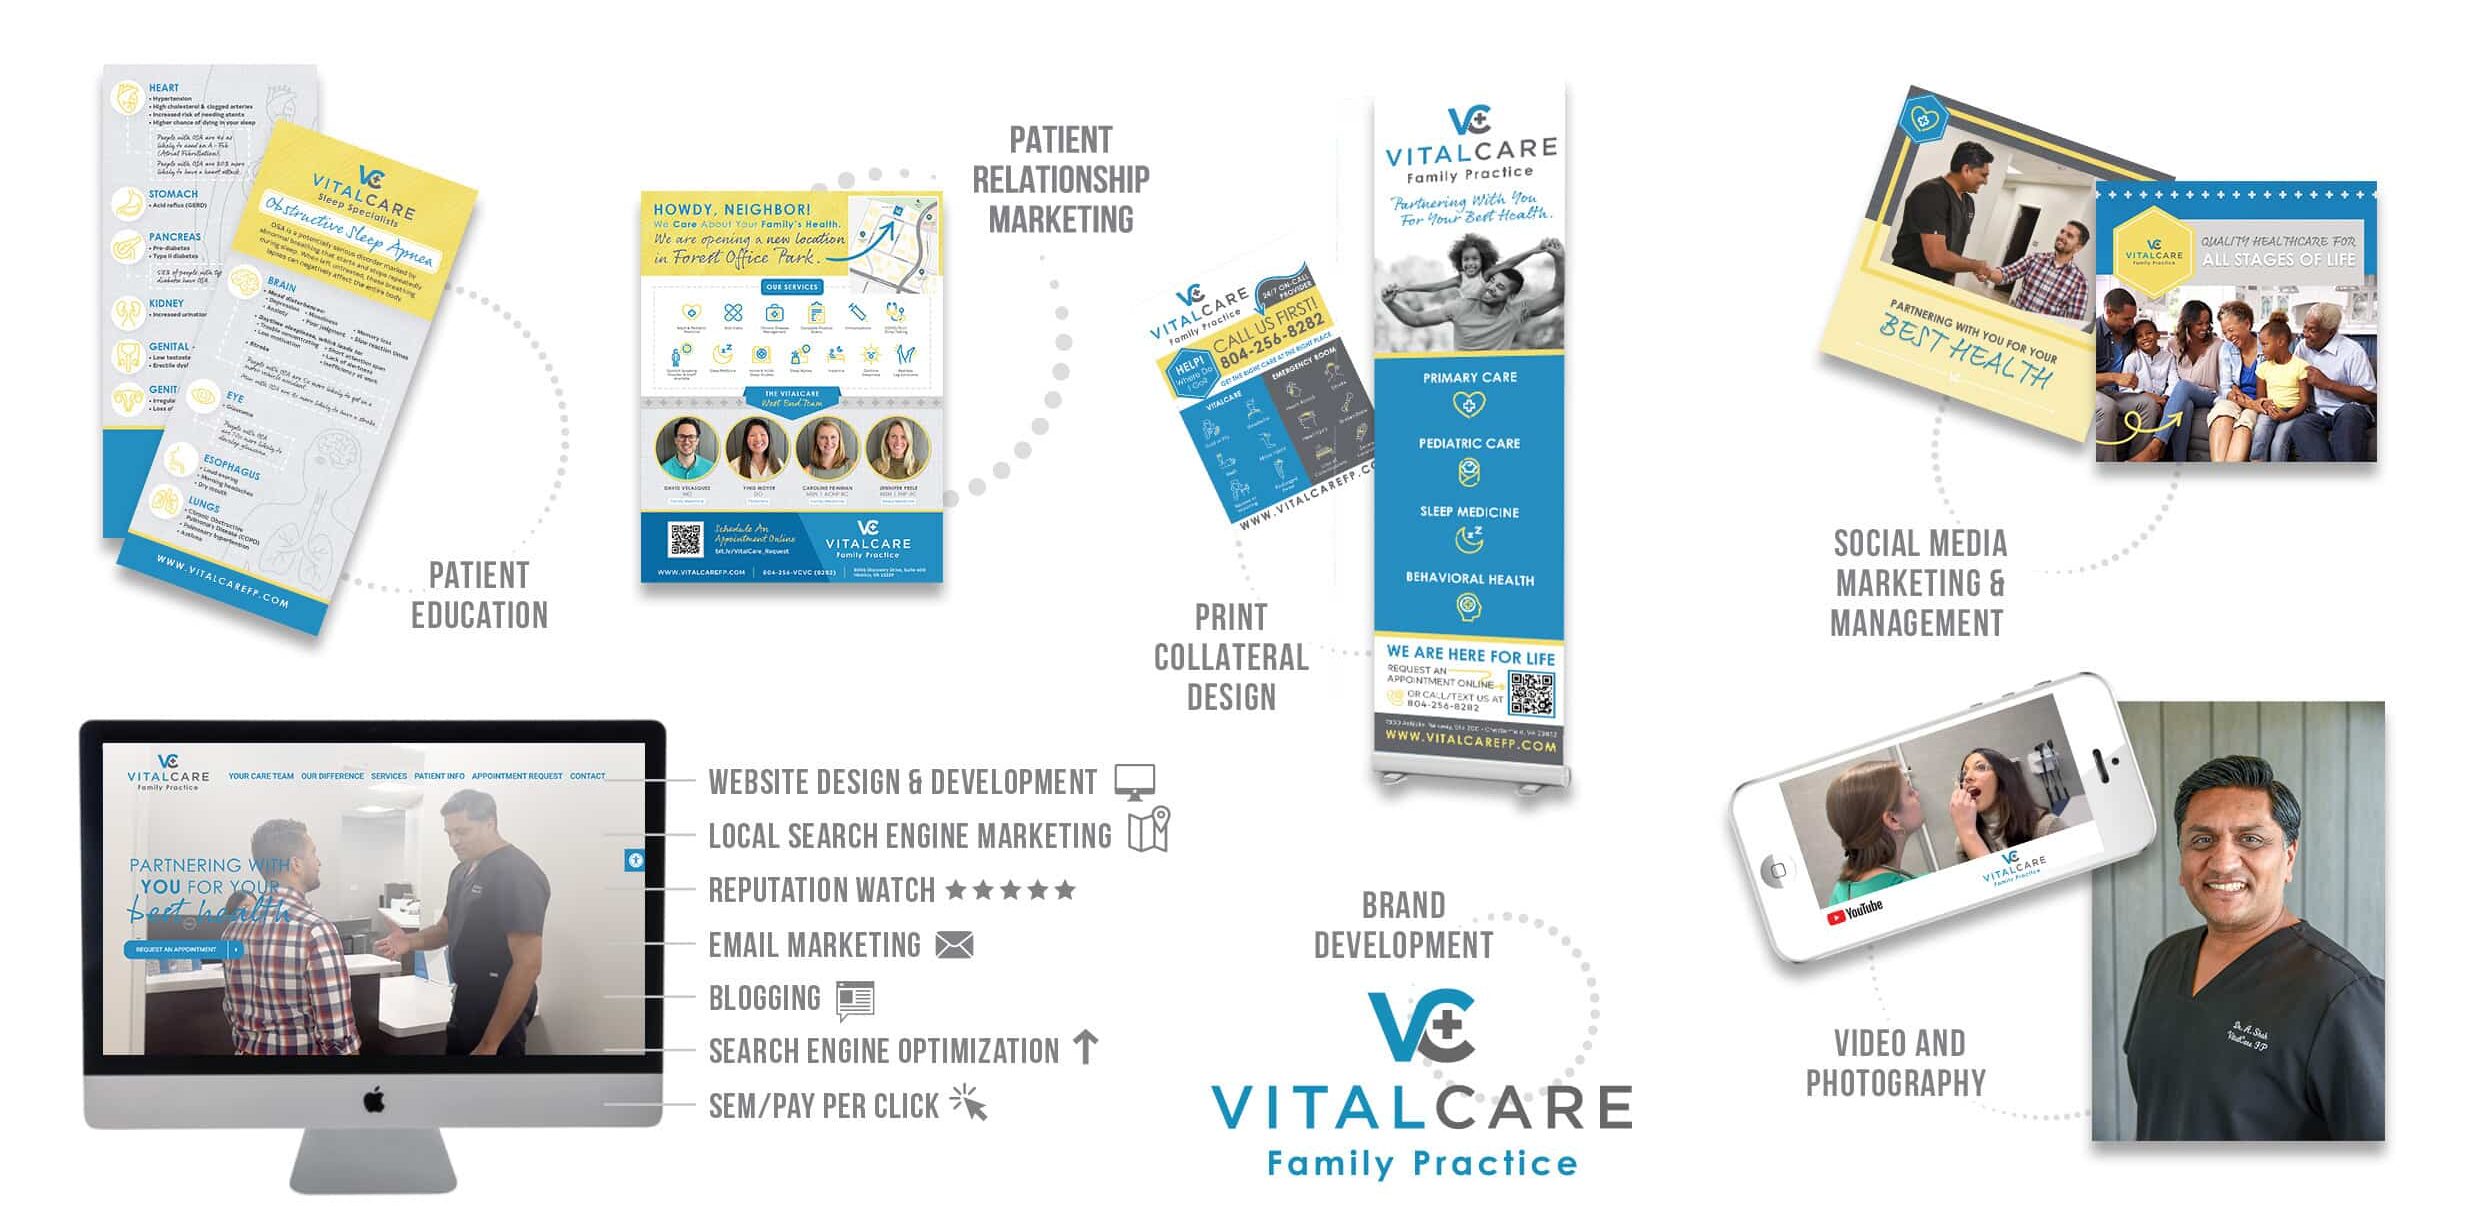 Vital care family practice Marketing